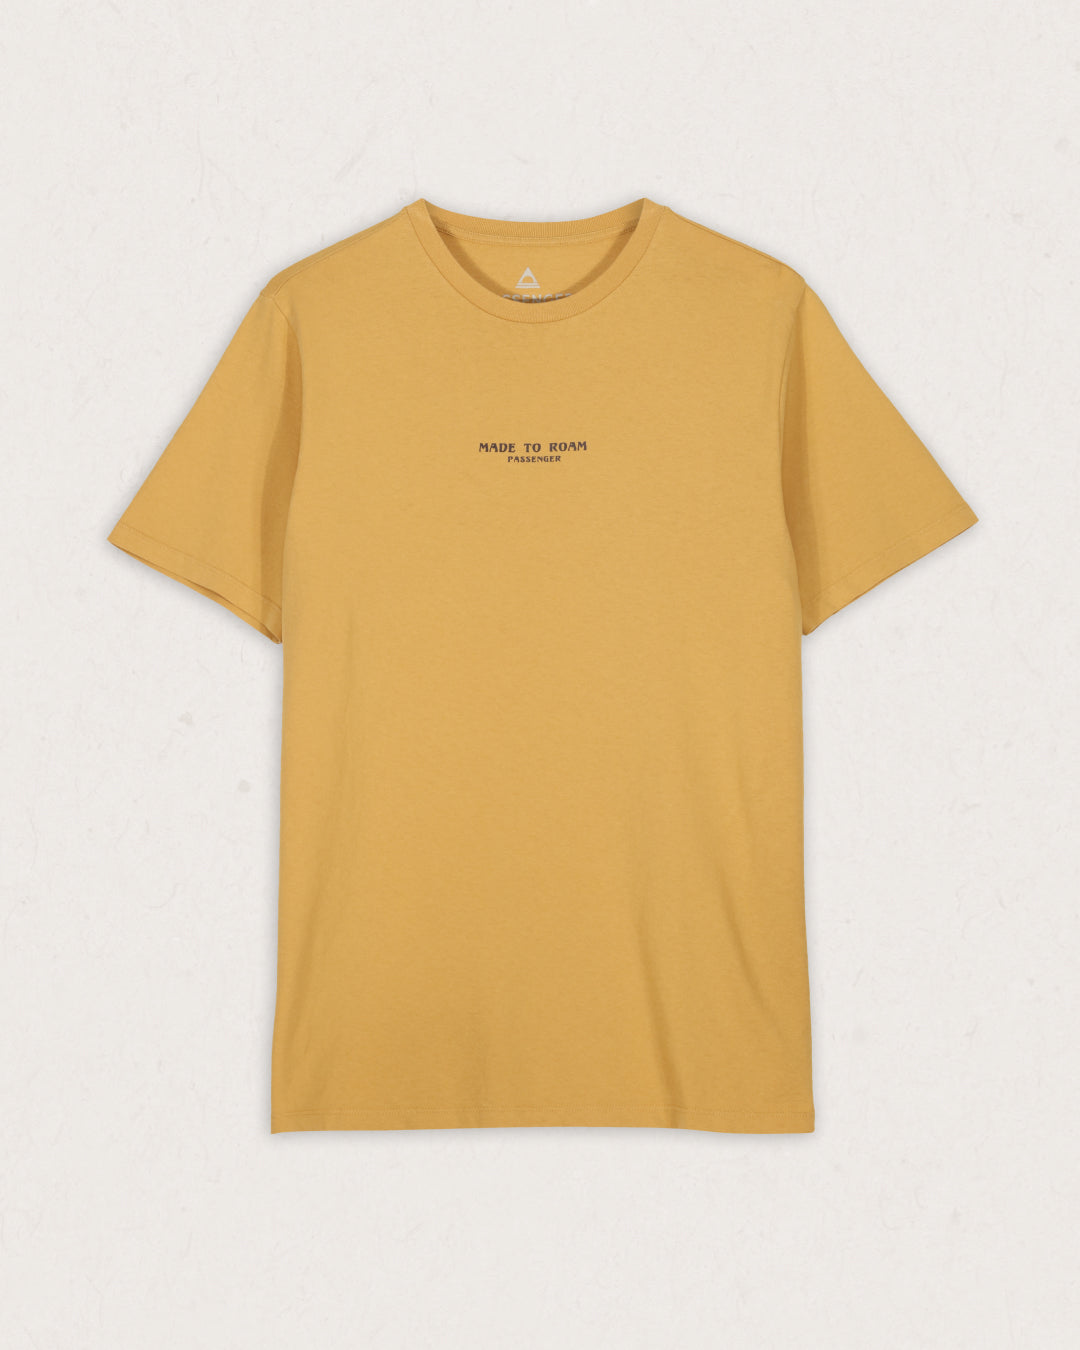 Sundown Recycled Cotton T-Shirt - Mustard Gold